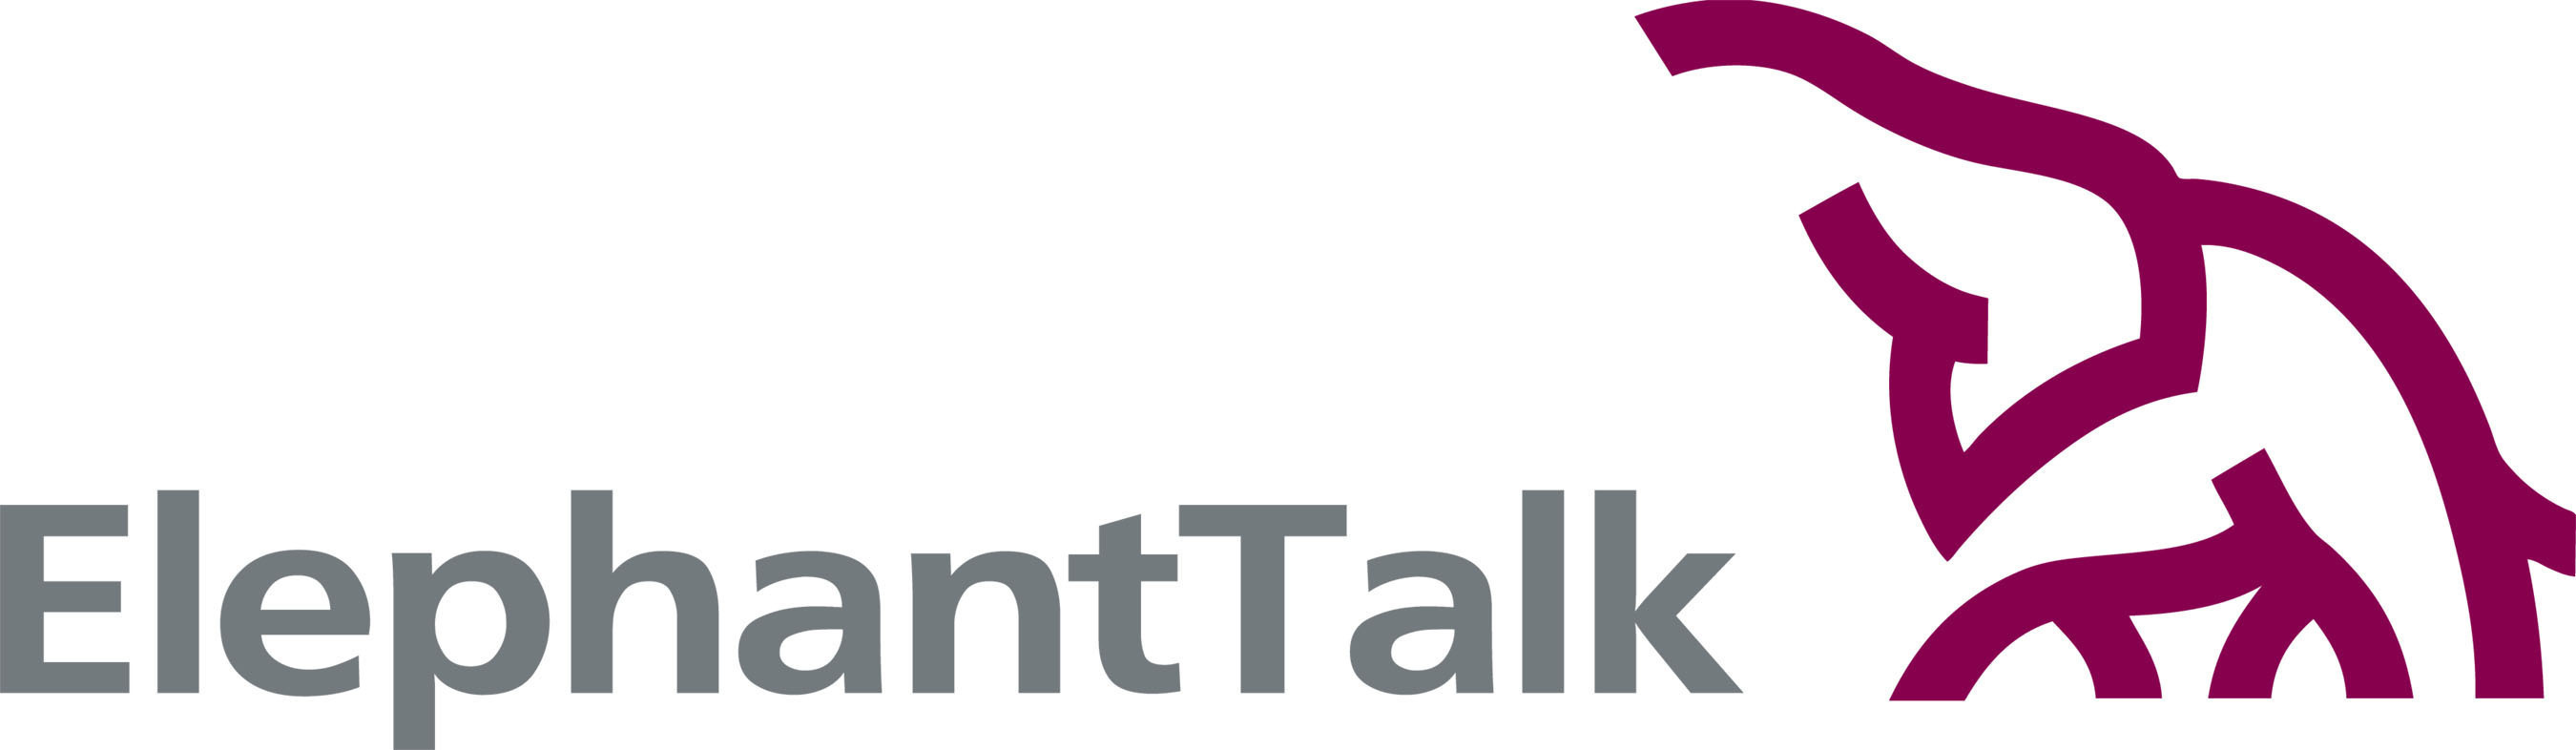 Elephant Talk Communications' Logo